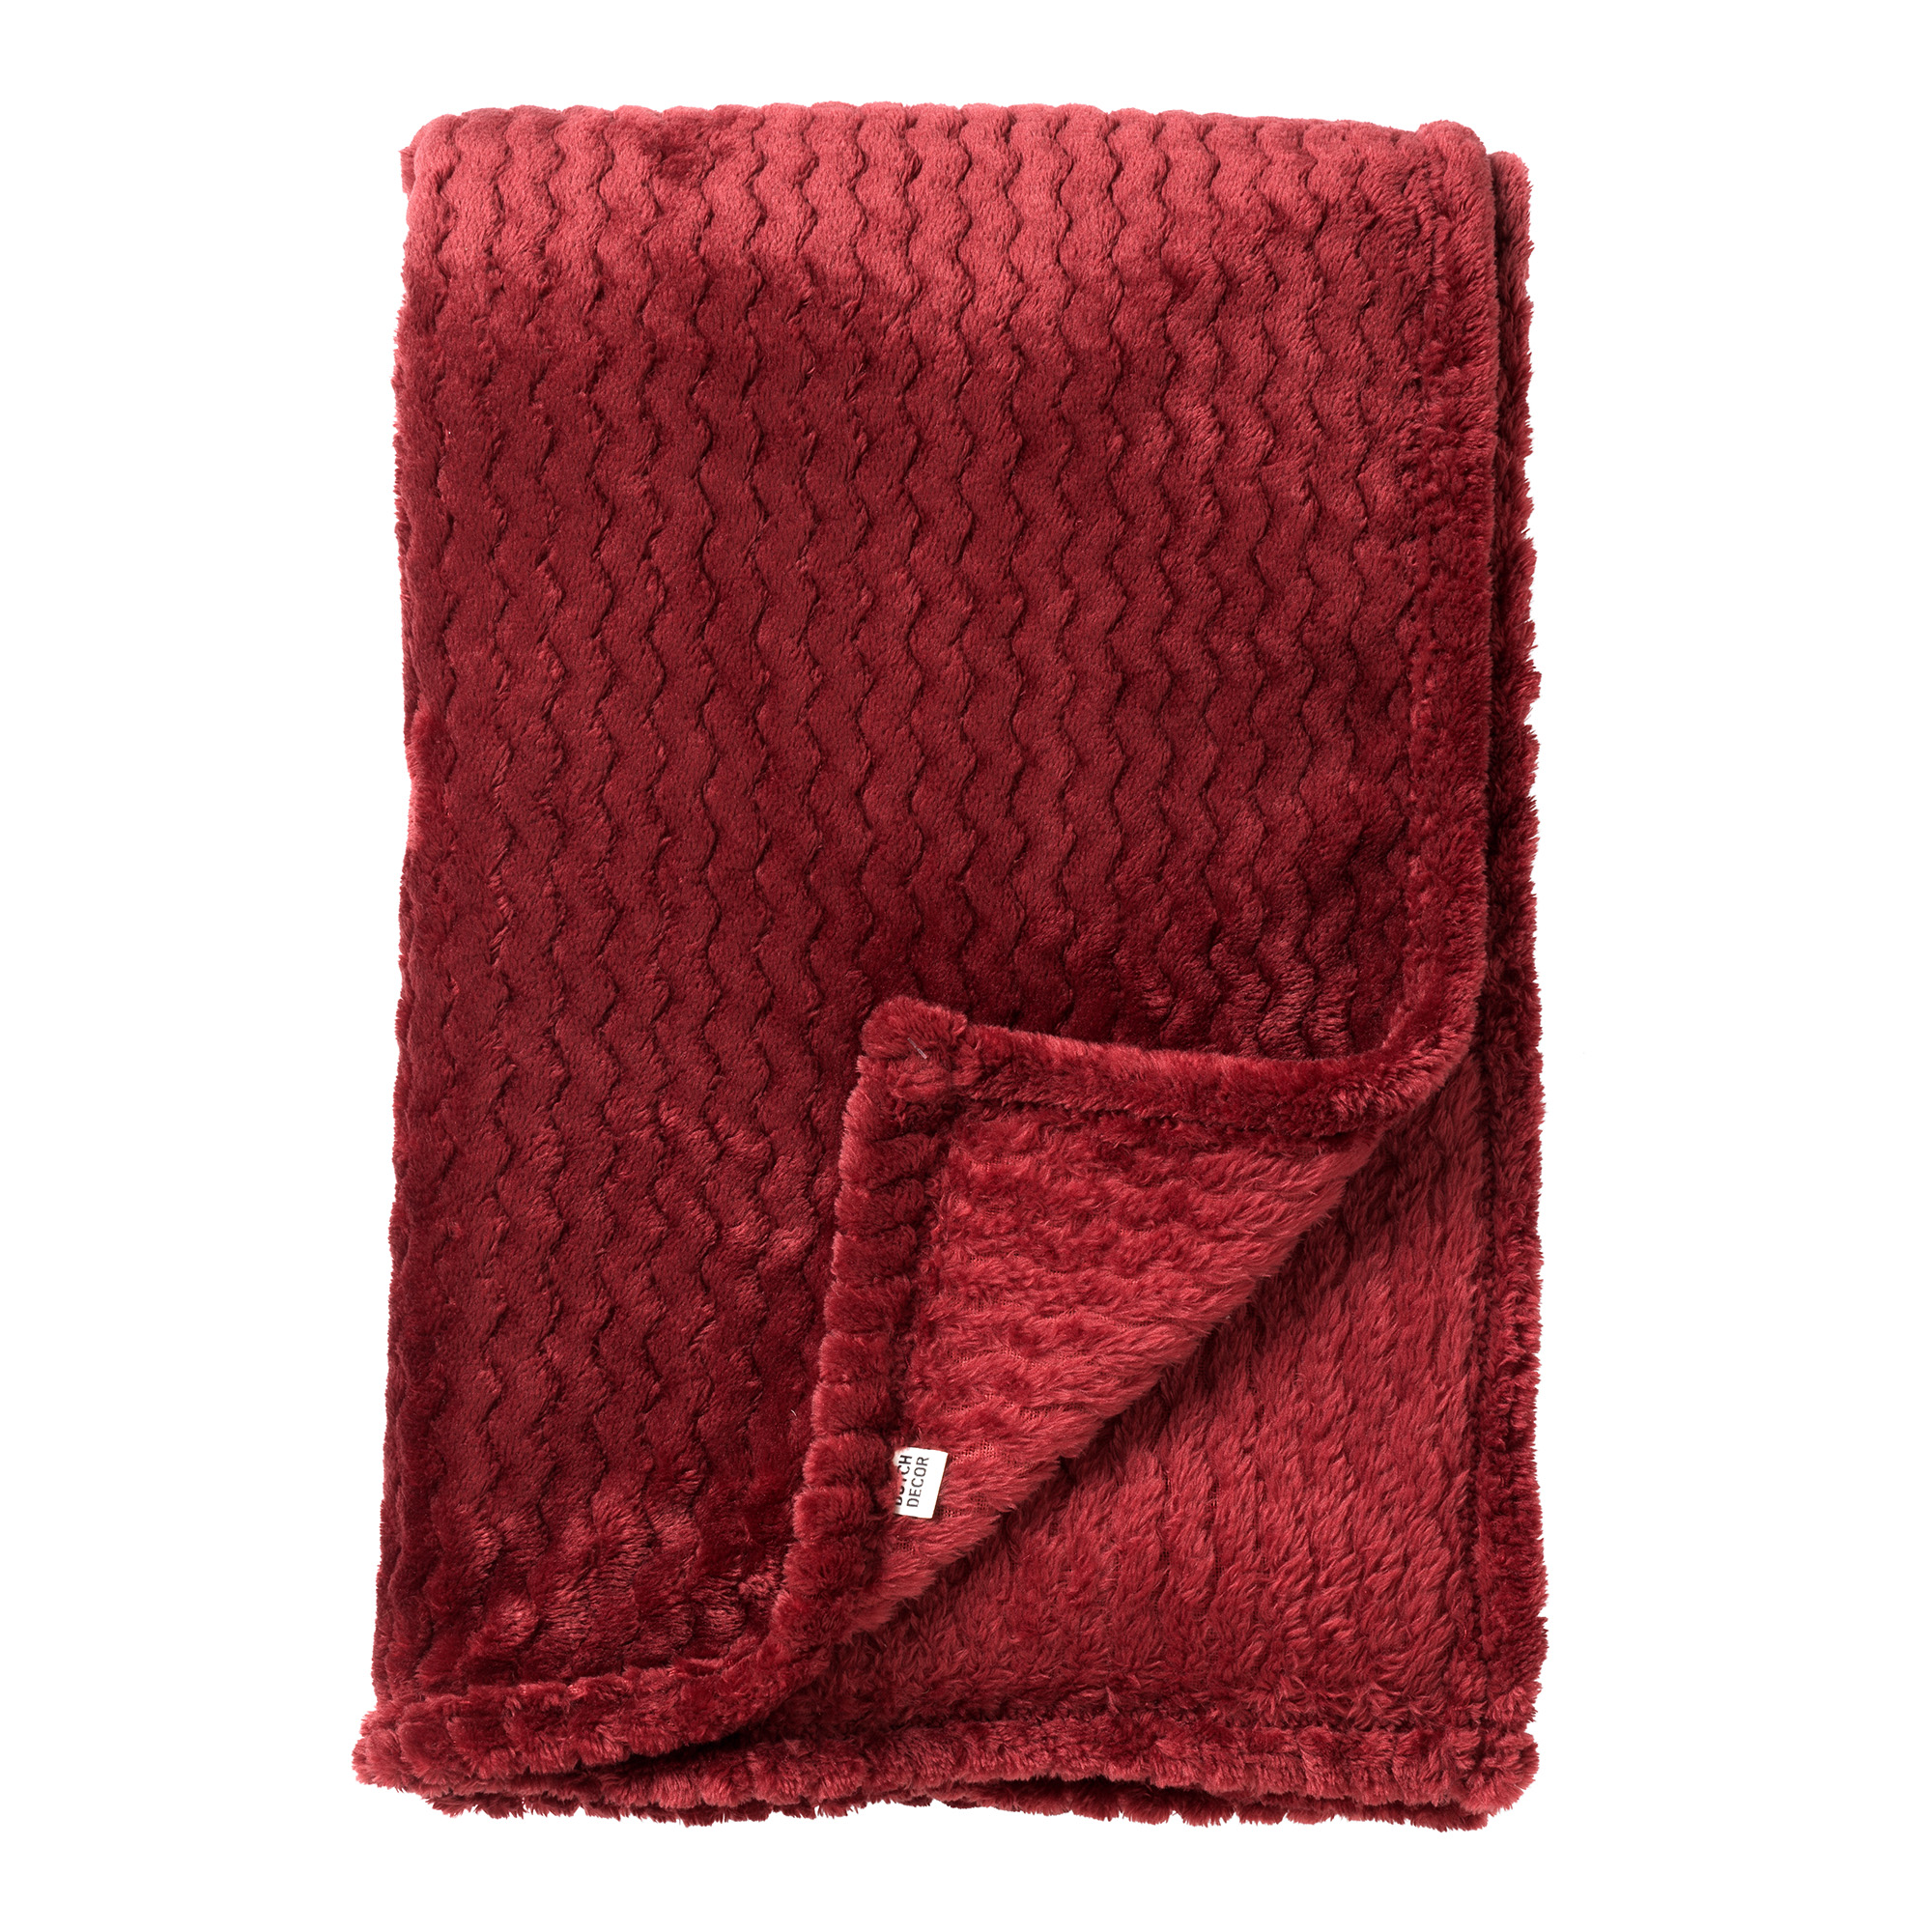 MARA - Plaid 150x200 cm - zigzag patroon - superzacht  - Merlot - rood